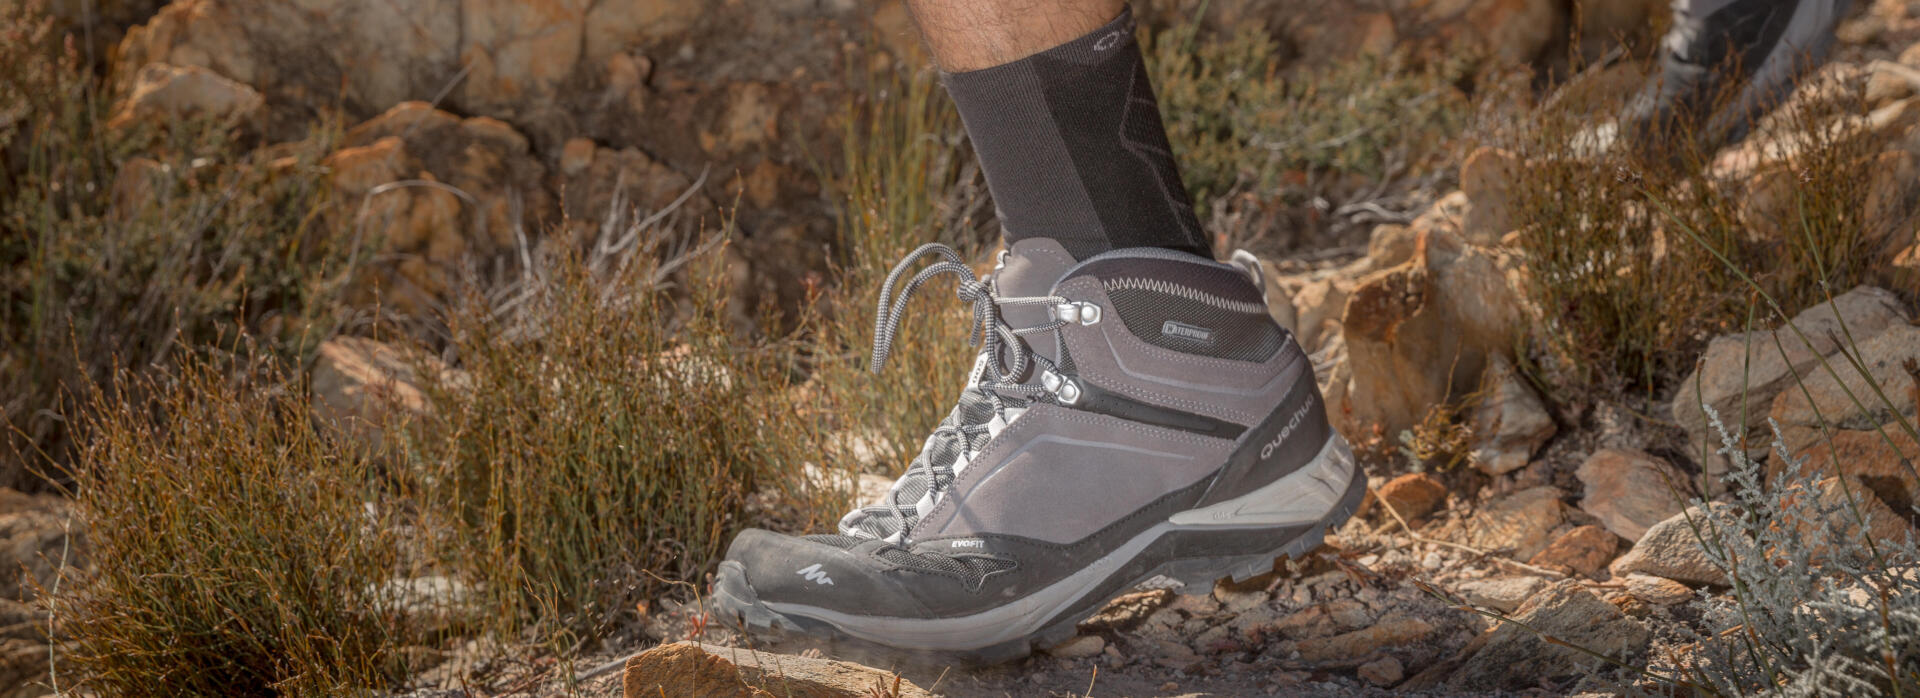 How to choose hiking socks?